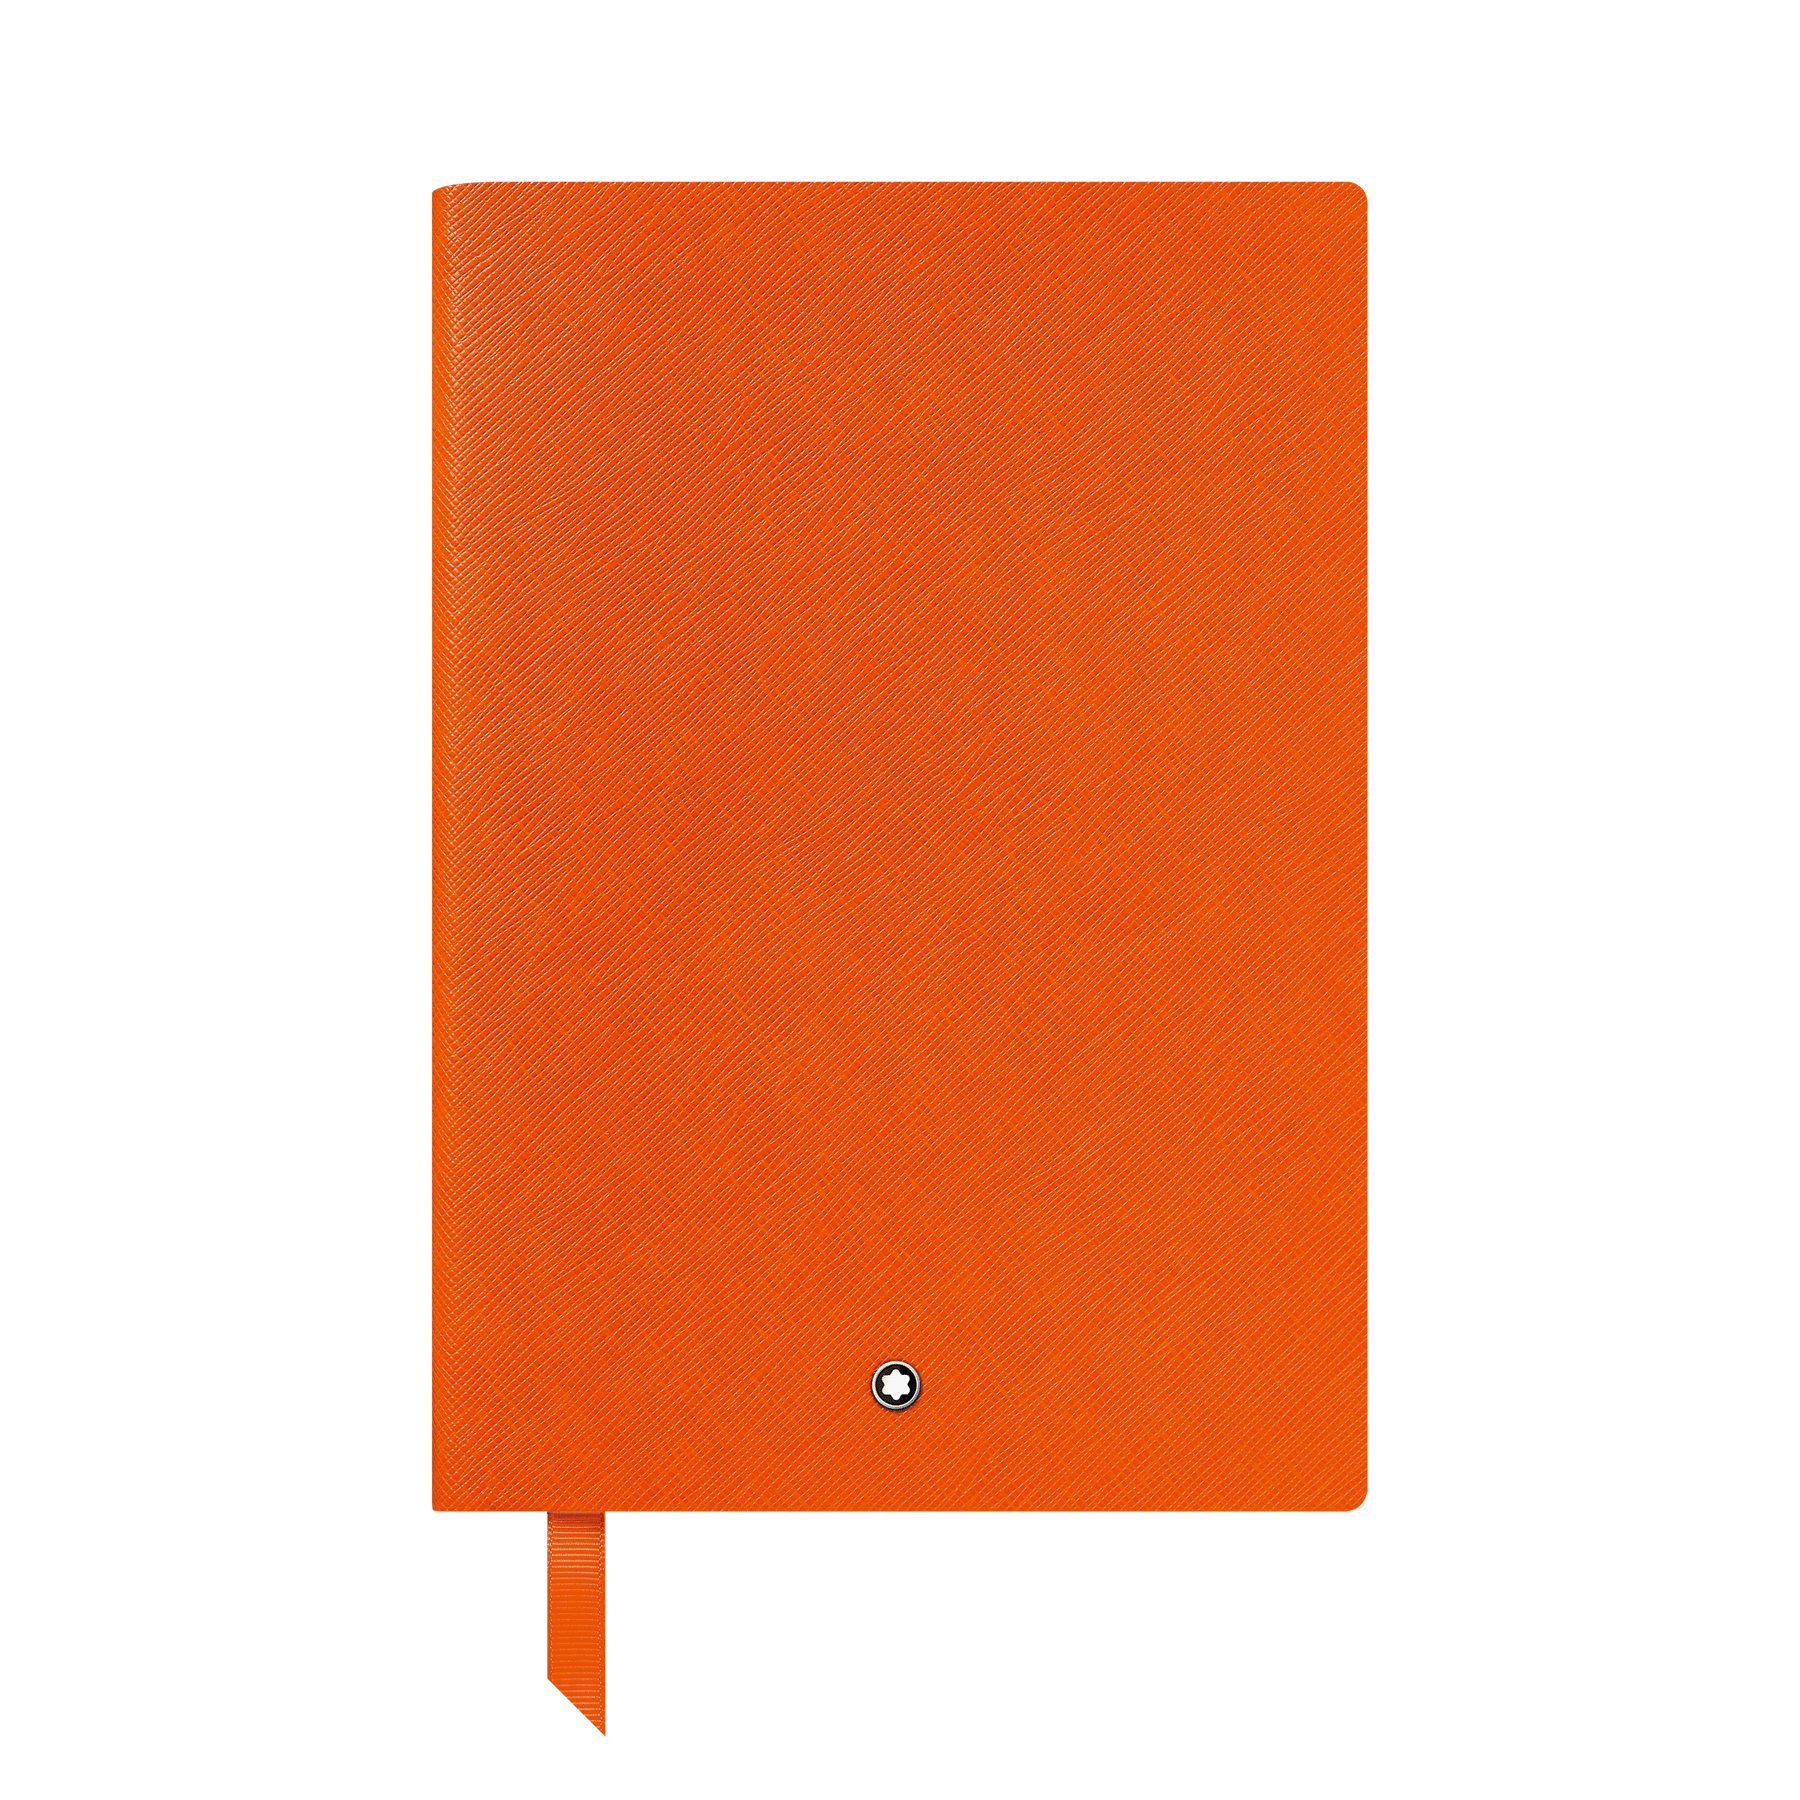 Notebook #146 Manganese Orange